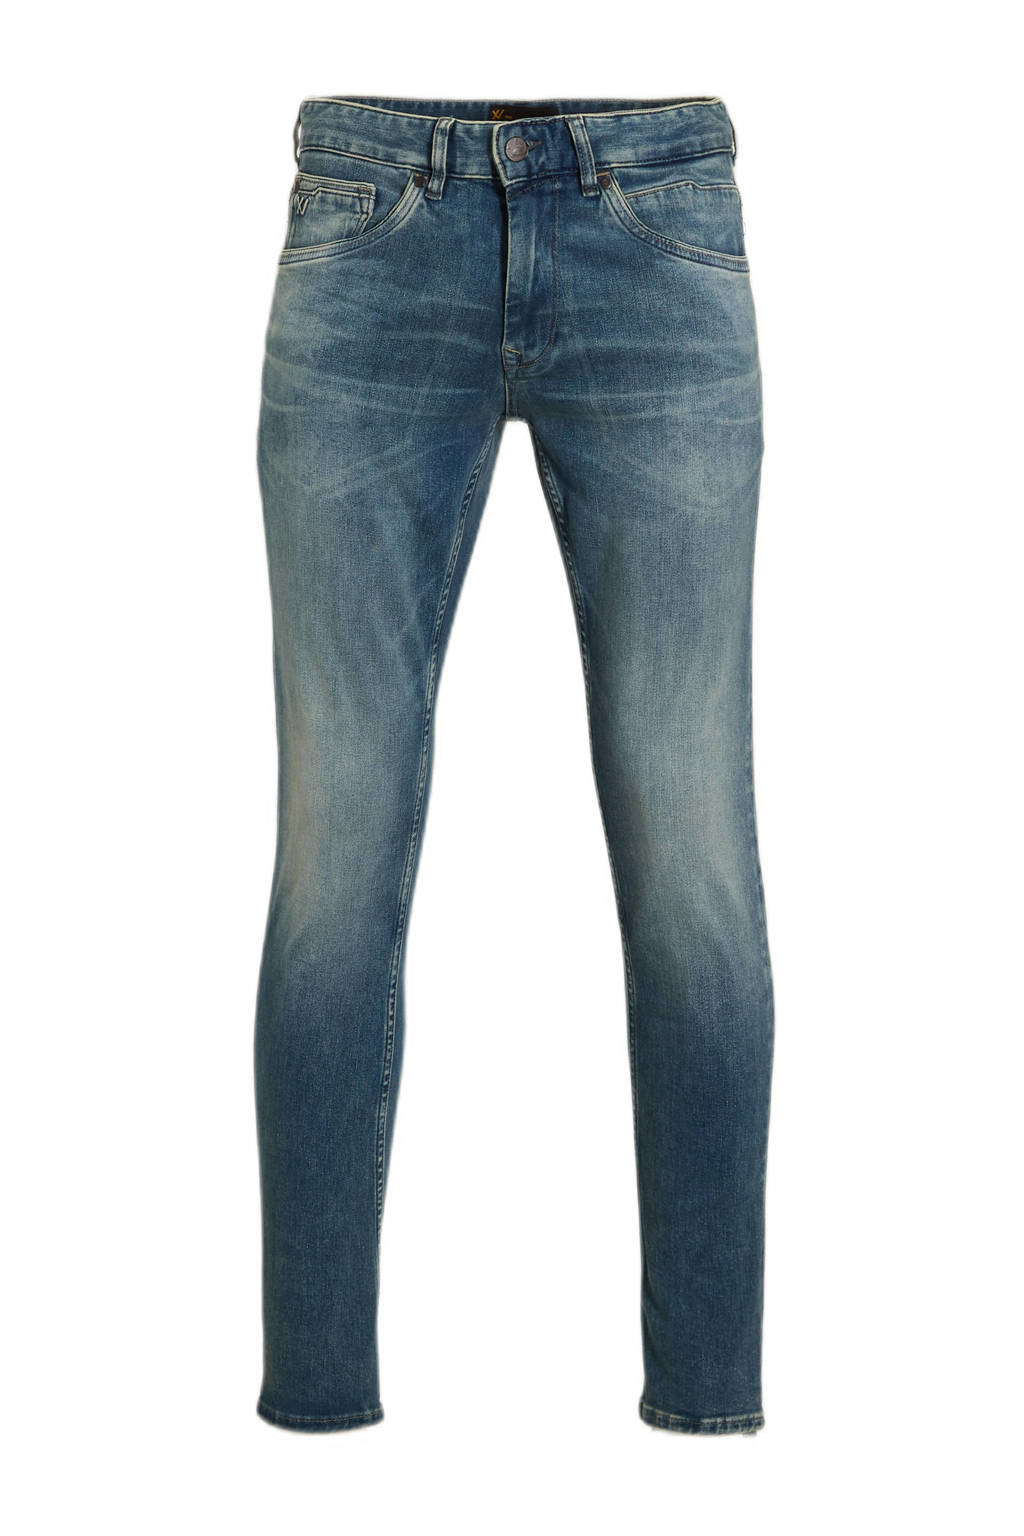 PME Legend slim fit jeans XV sky dirt wash | wehkamp